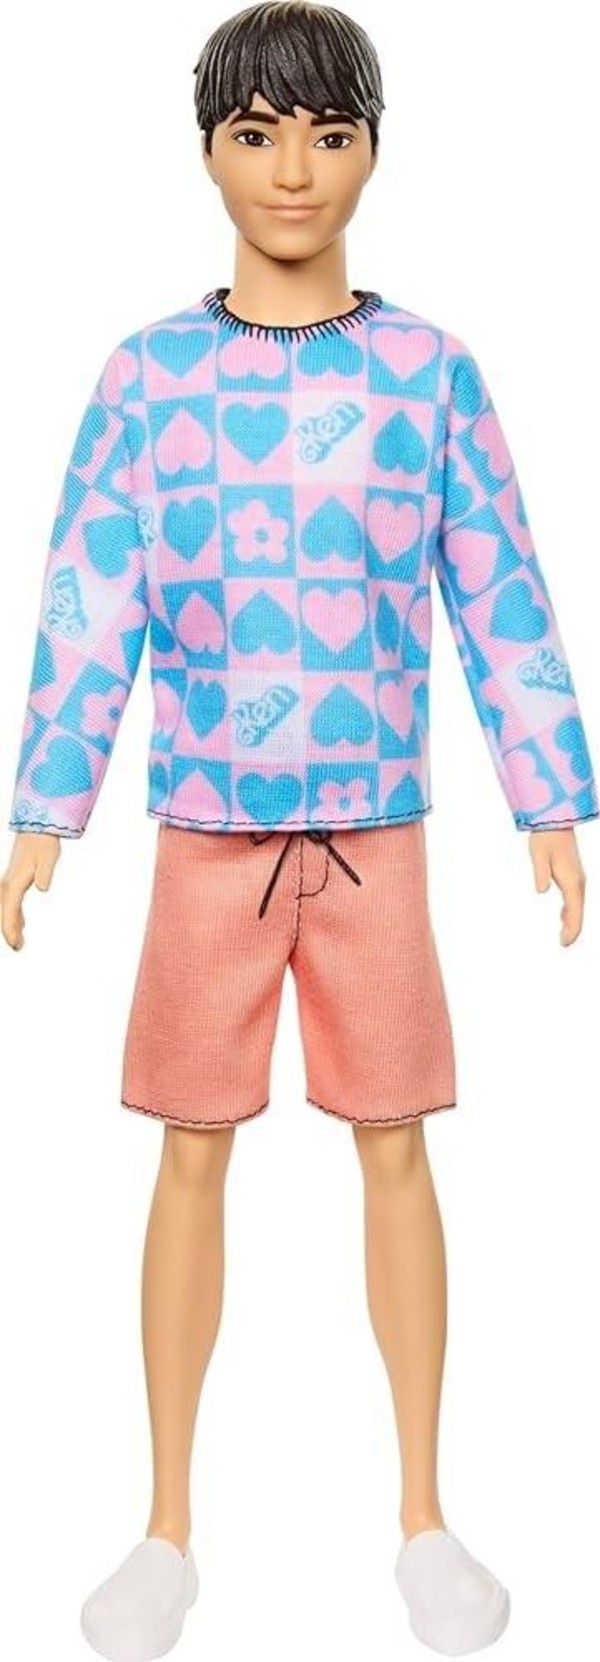 Lalka Barbie Fashionistas Ken